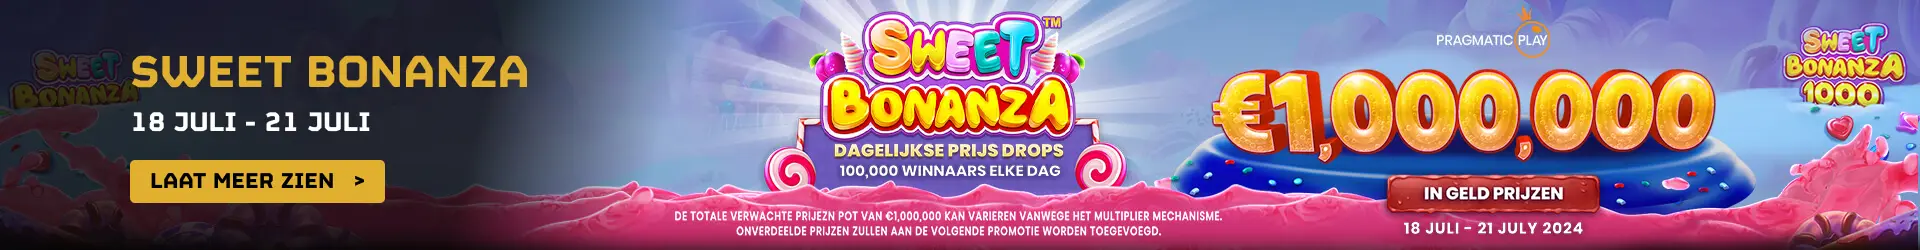 Sweet Bonanza Prize Drops bij Fair Play